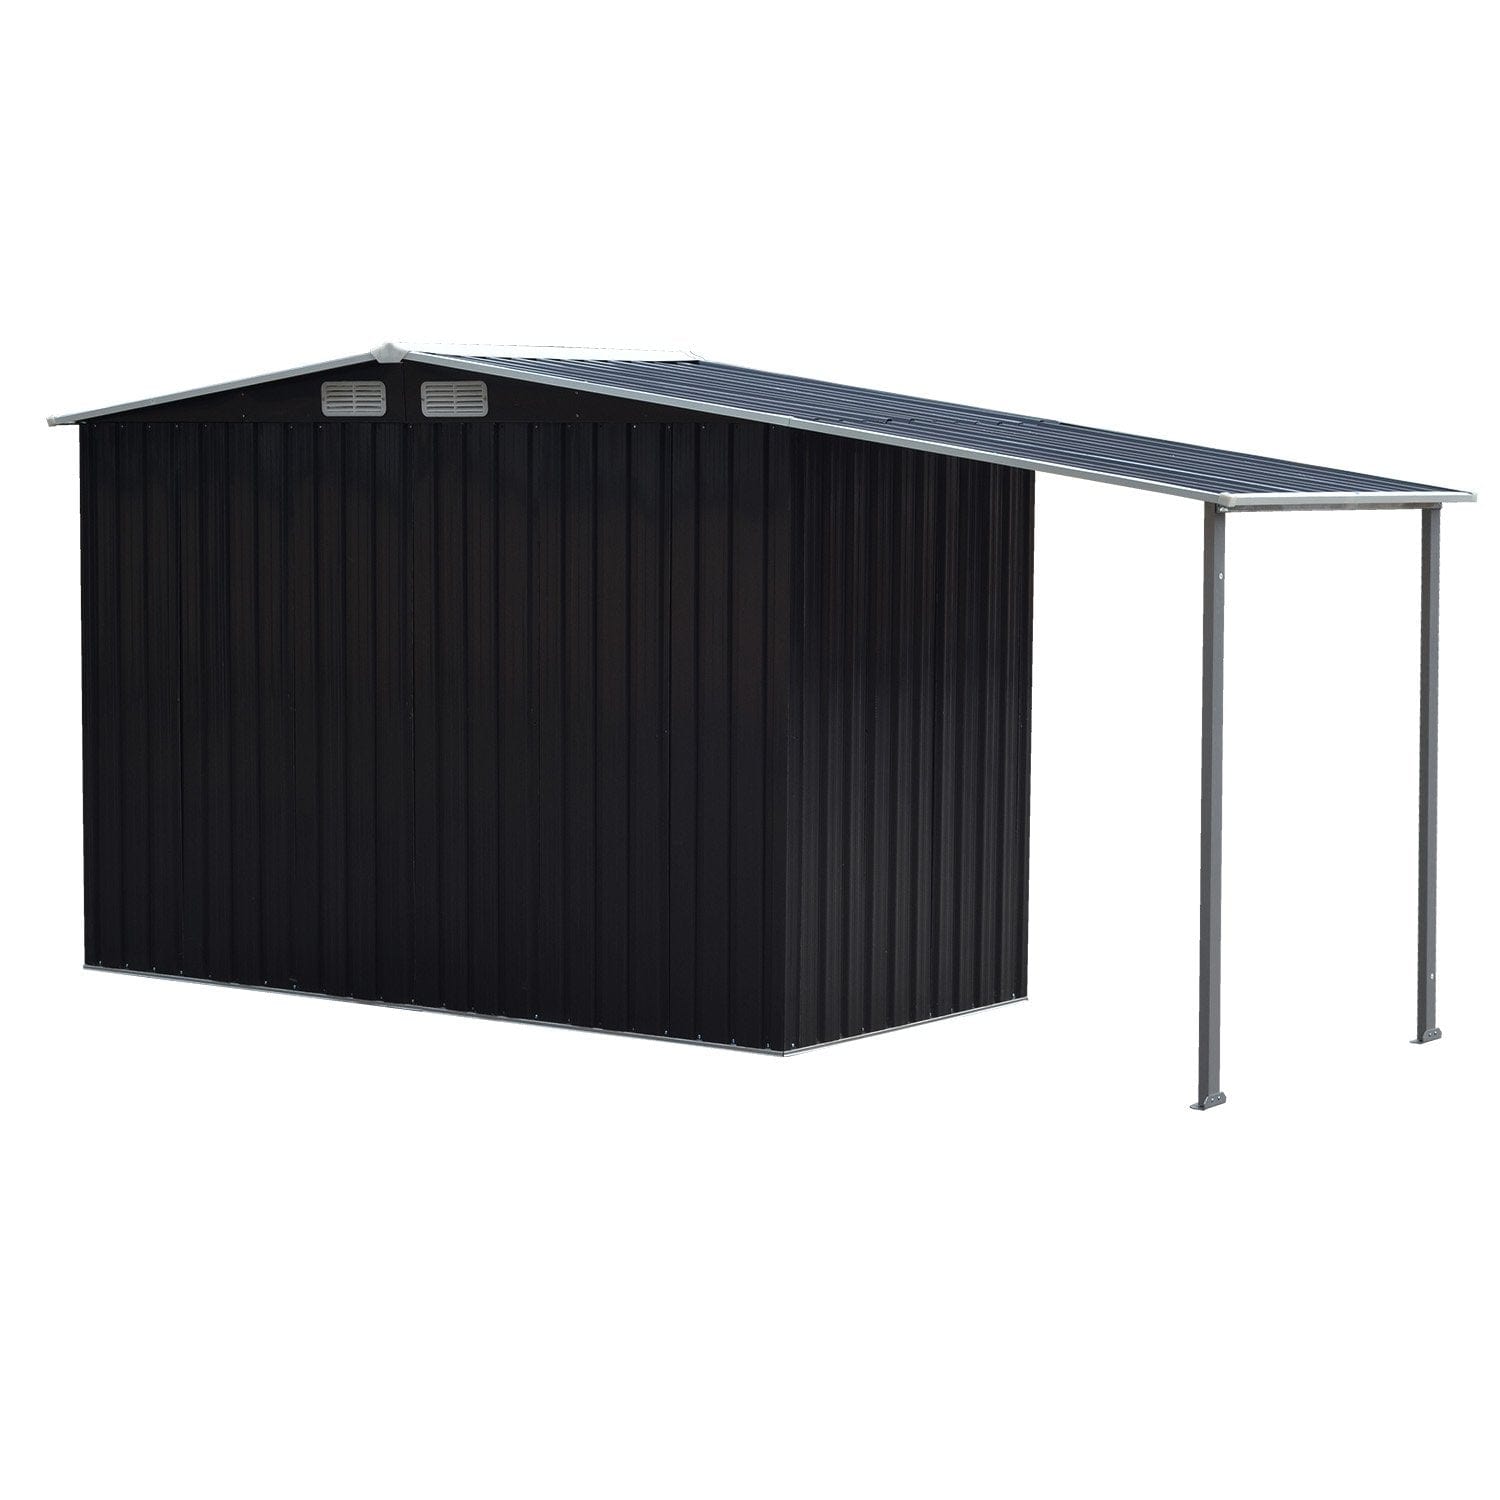 4x8ft Zinc Steel Garden Shed with Open Storage - Black